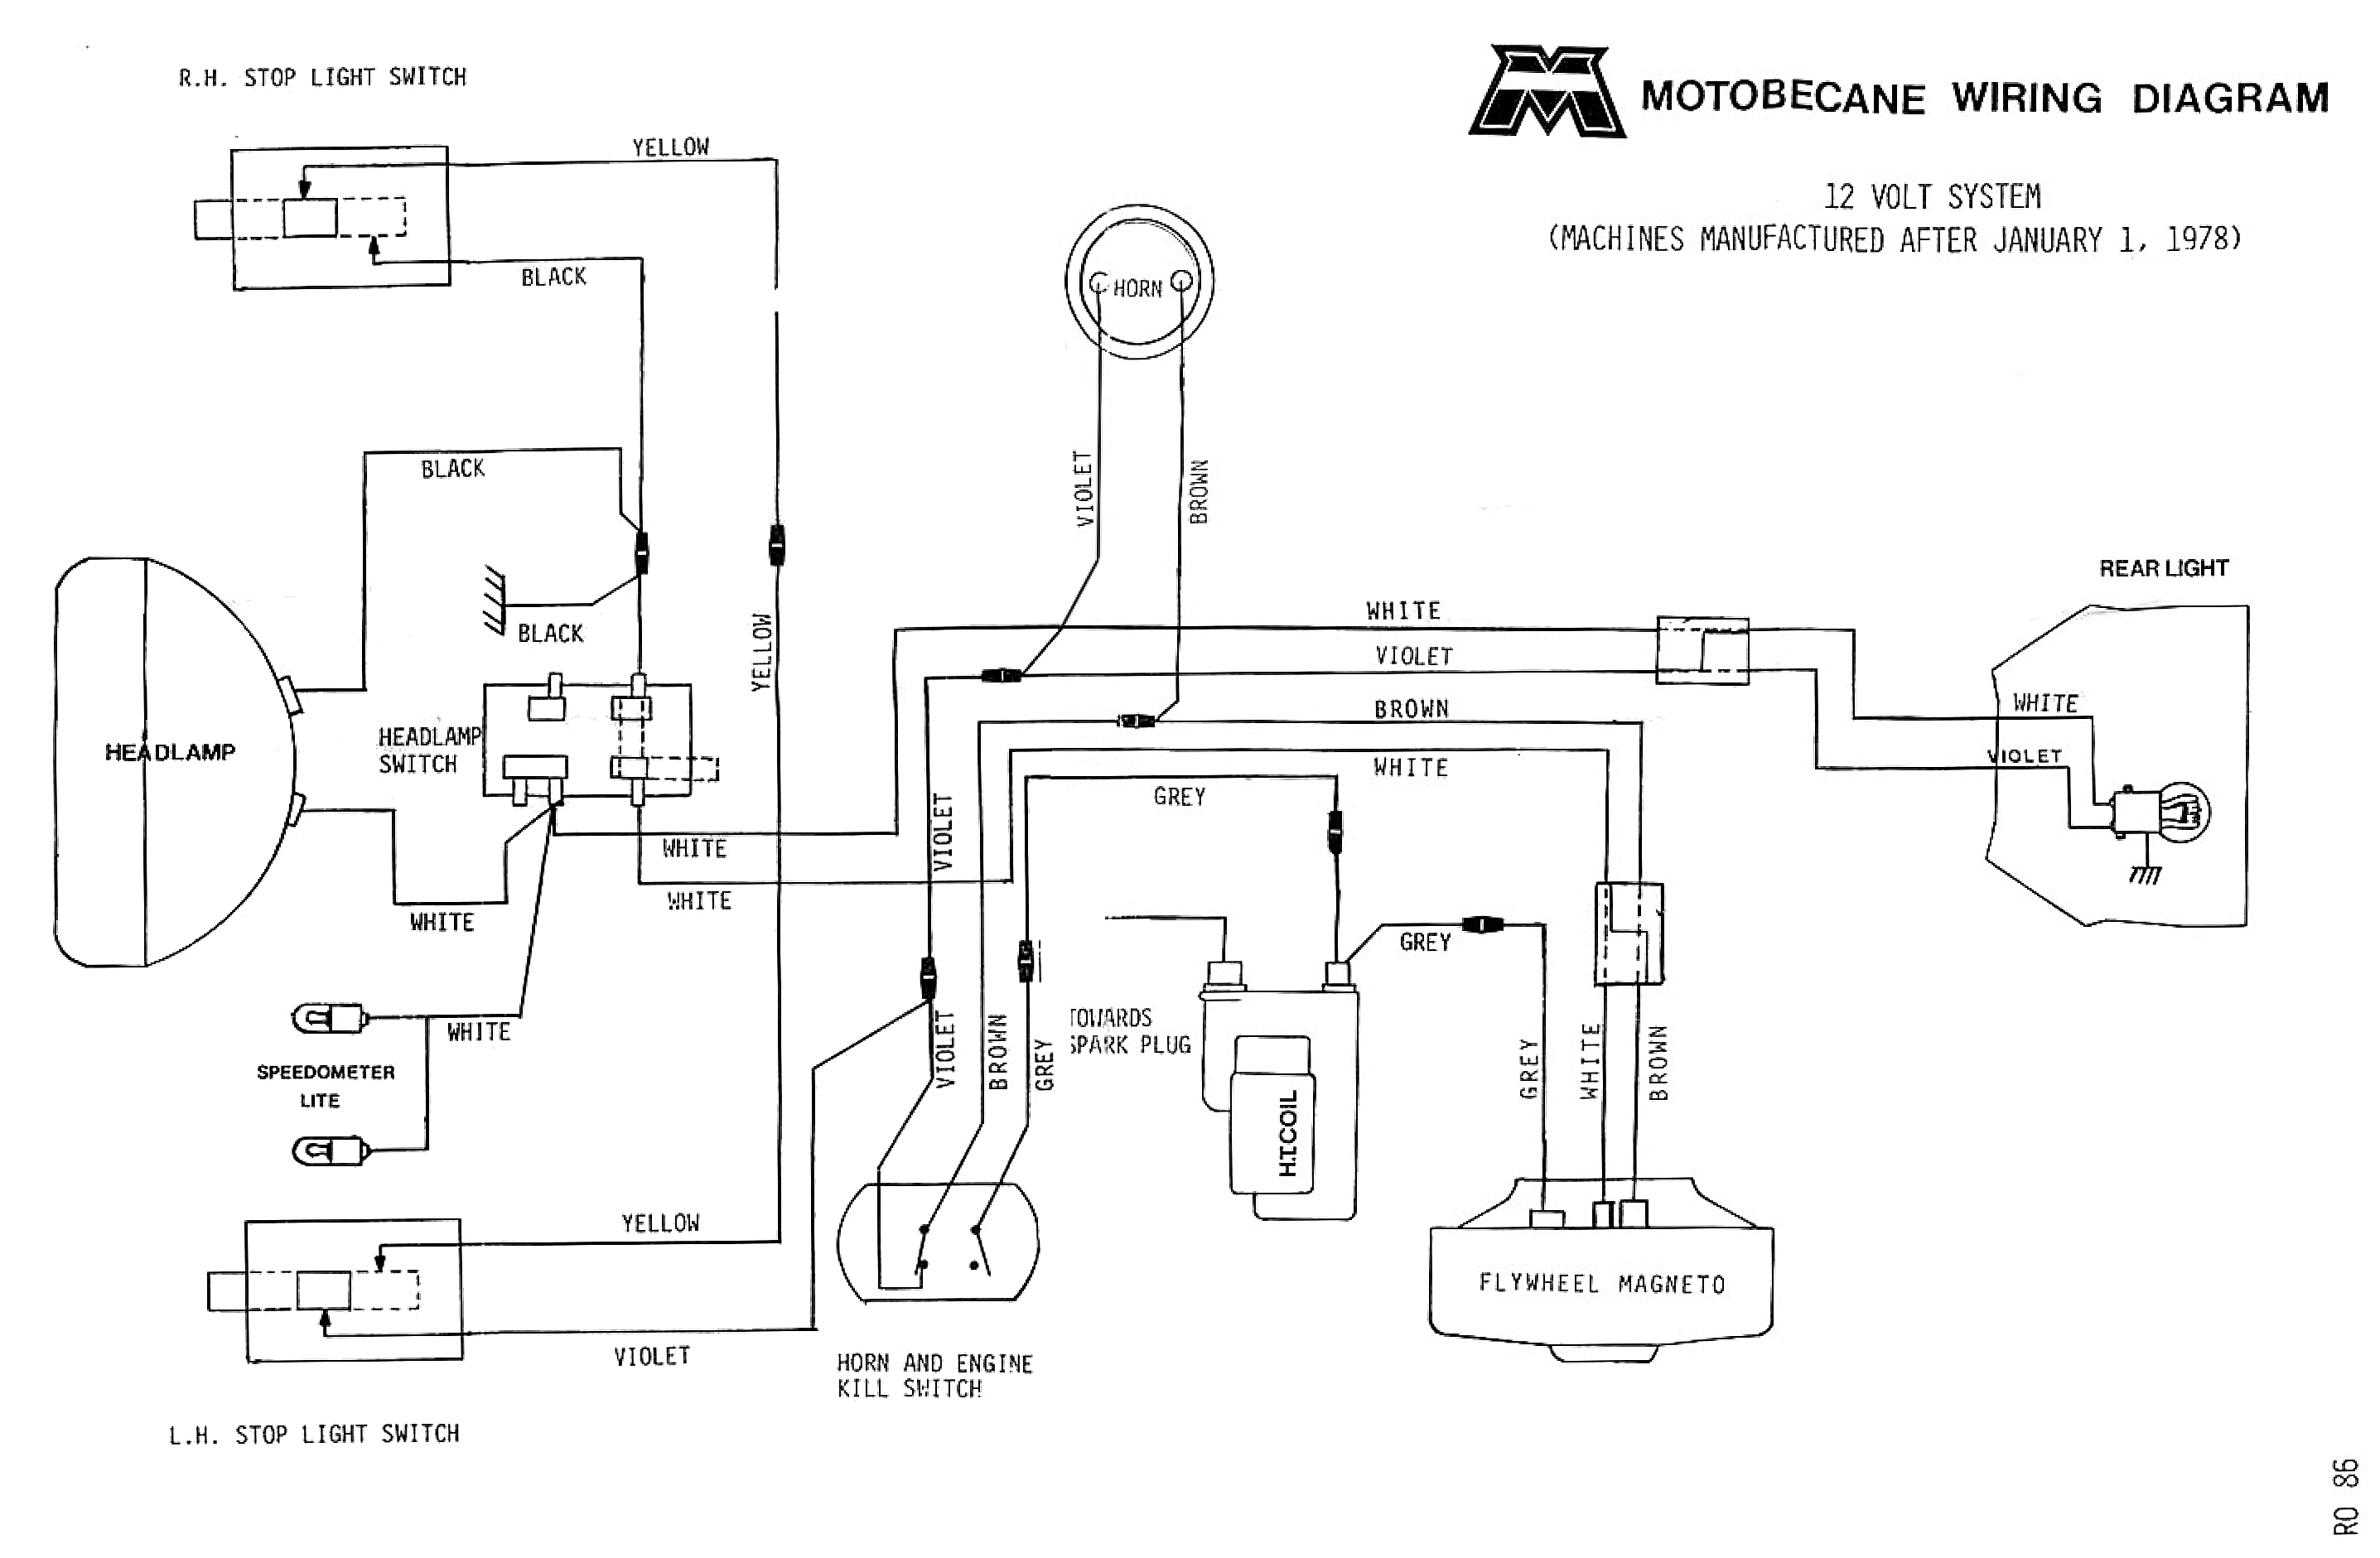 200136 volt key switch wiring diagram